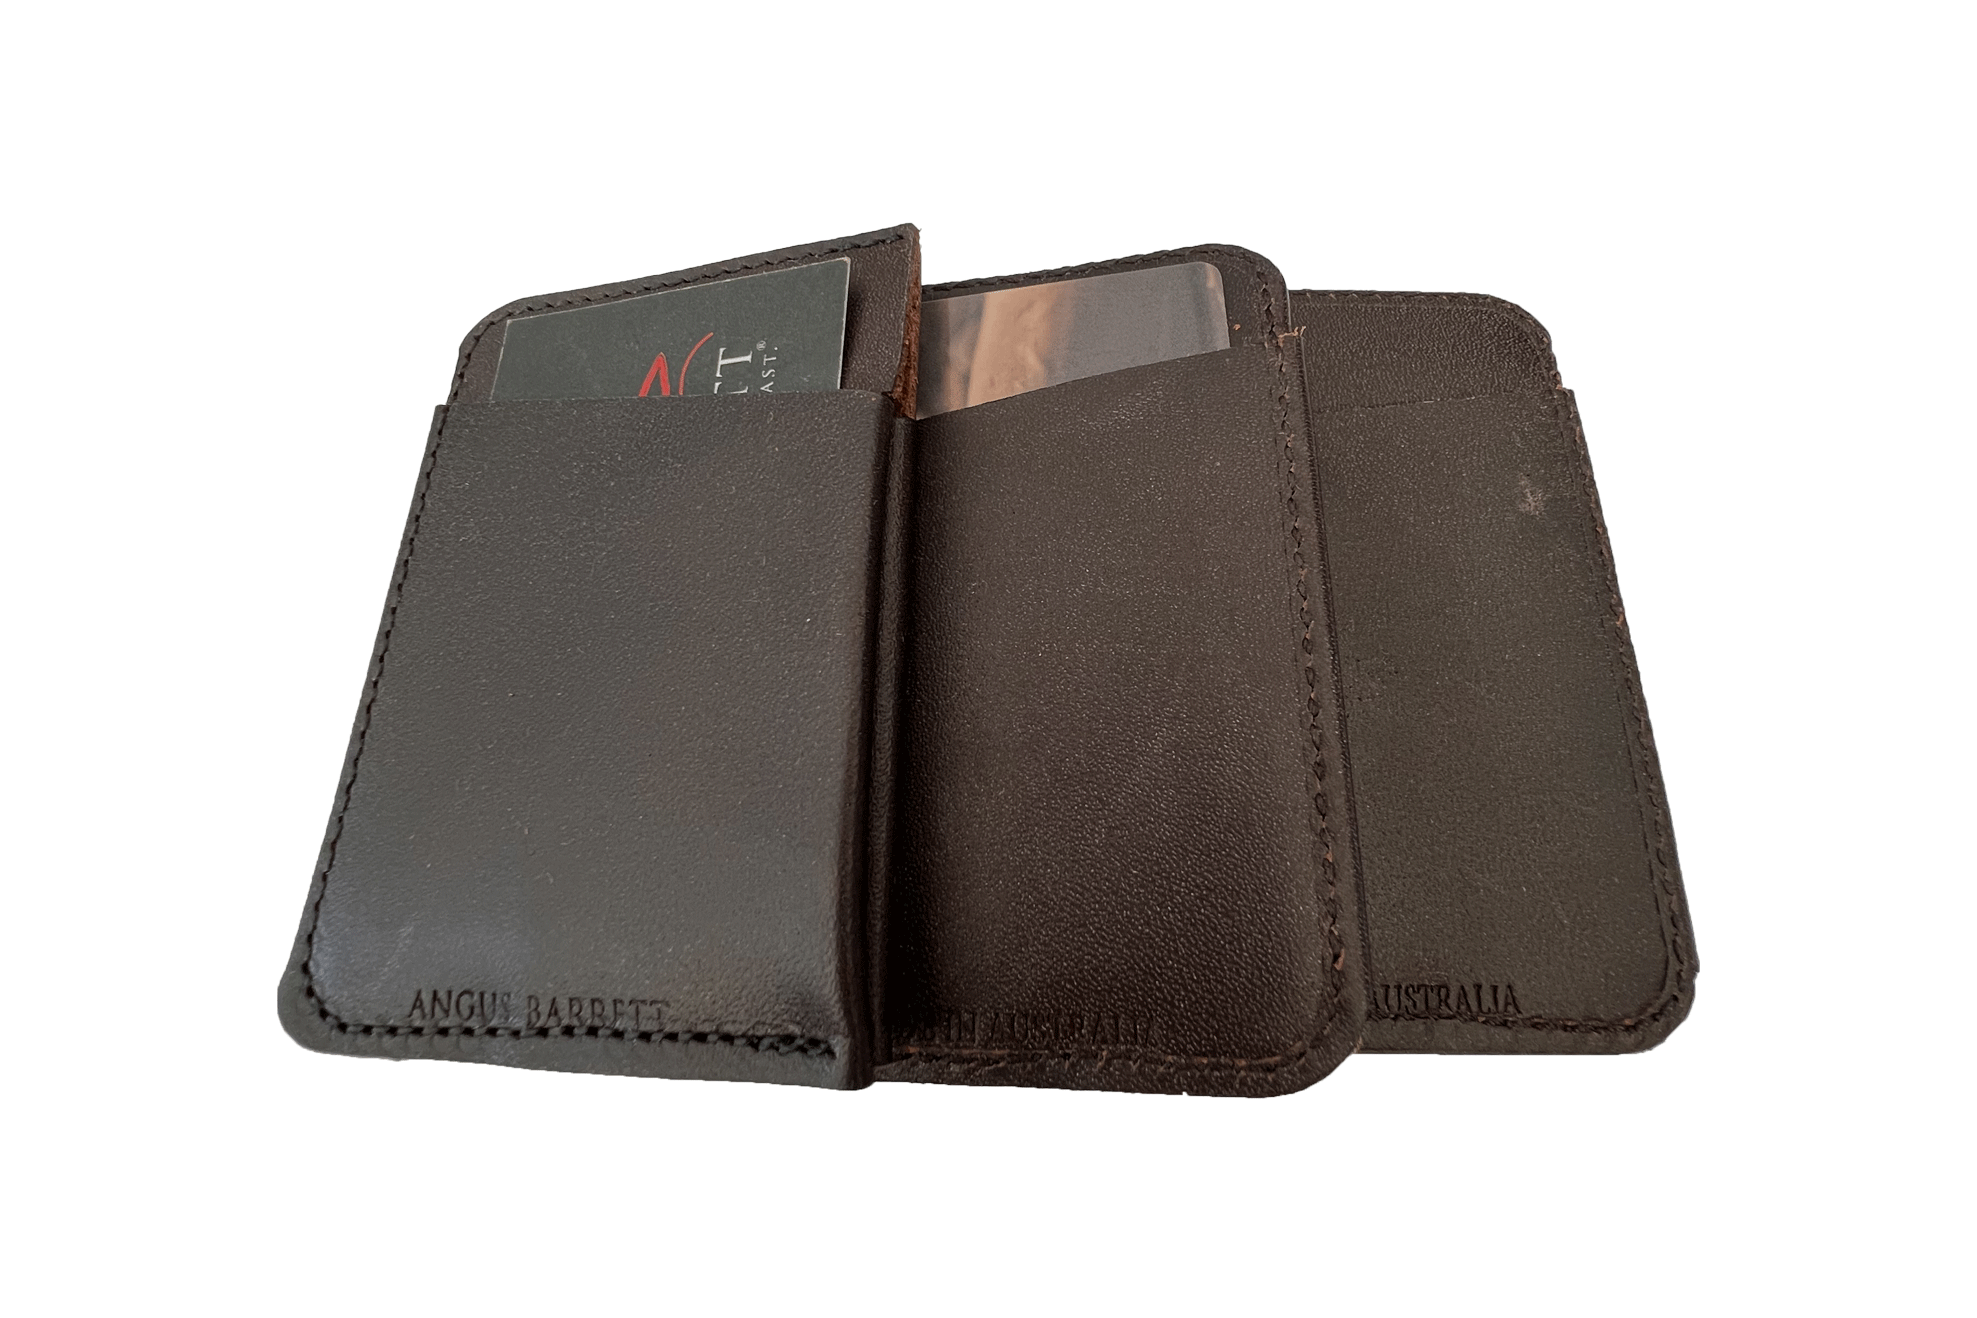 The Slip Leather Wallet - Brown Bovine Leather | Angus Barrett Saddlery